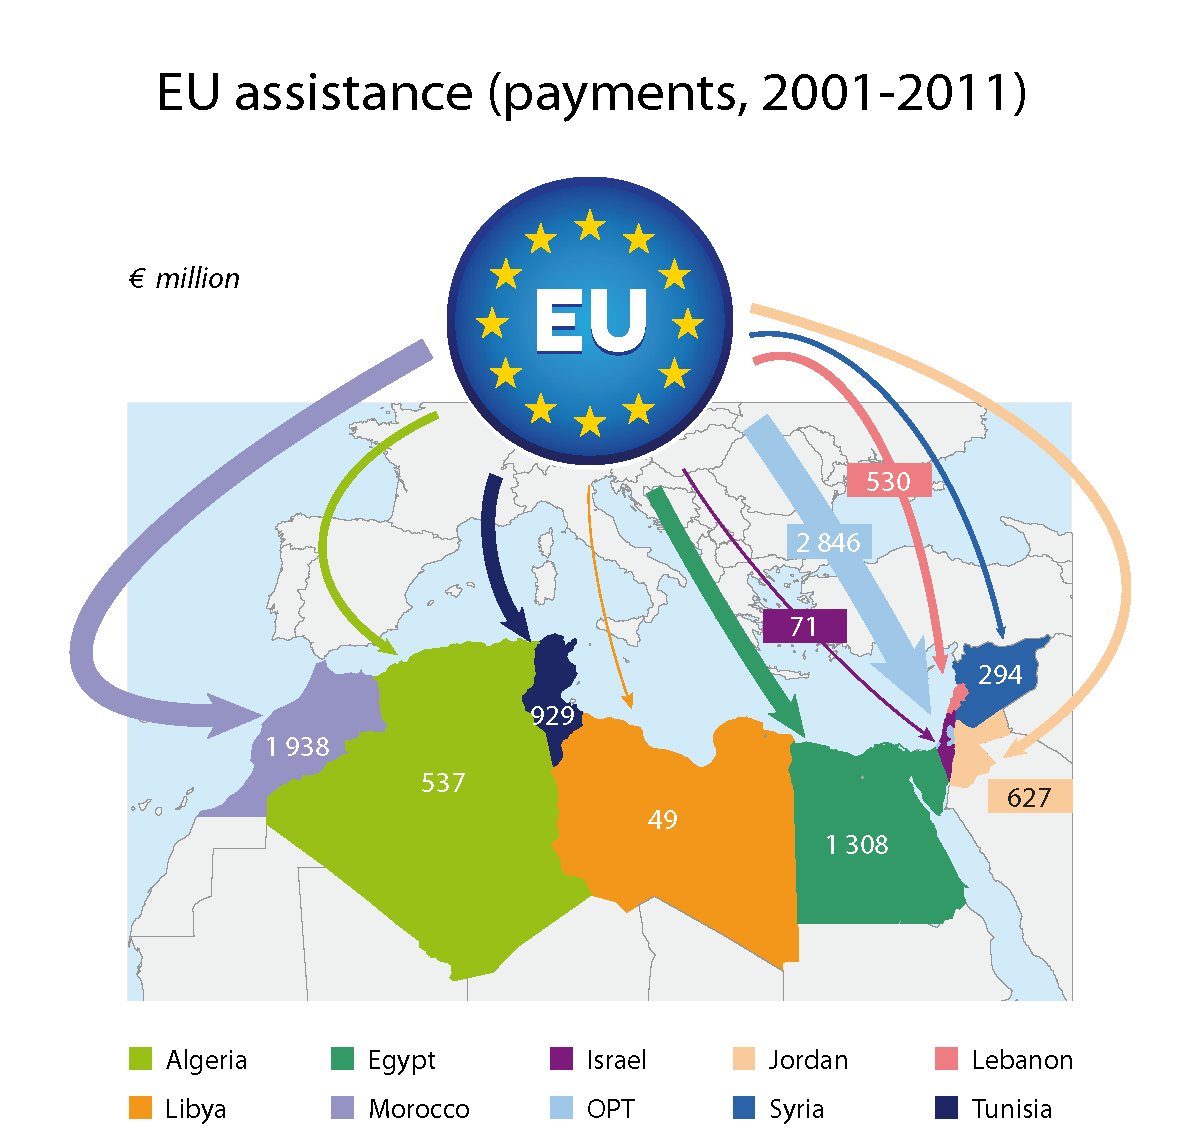 The EU’s southern Mediterranean neighbours